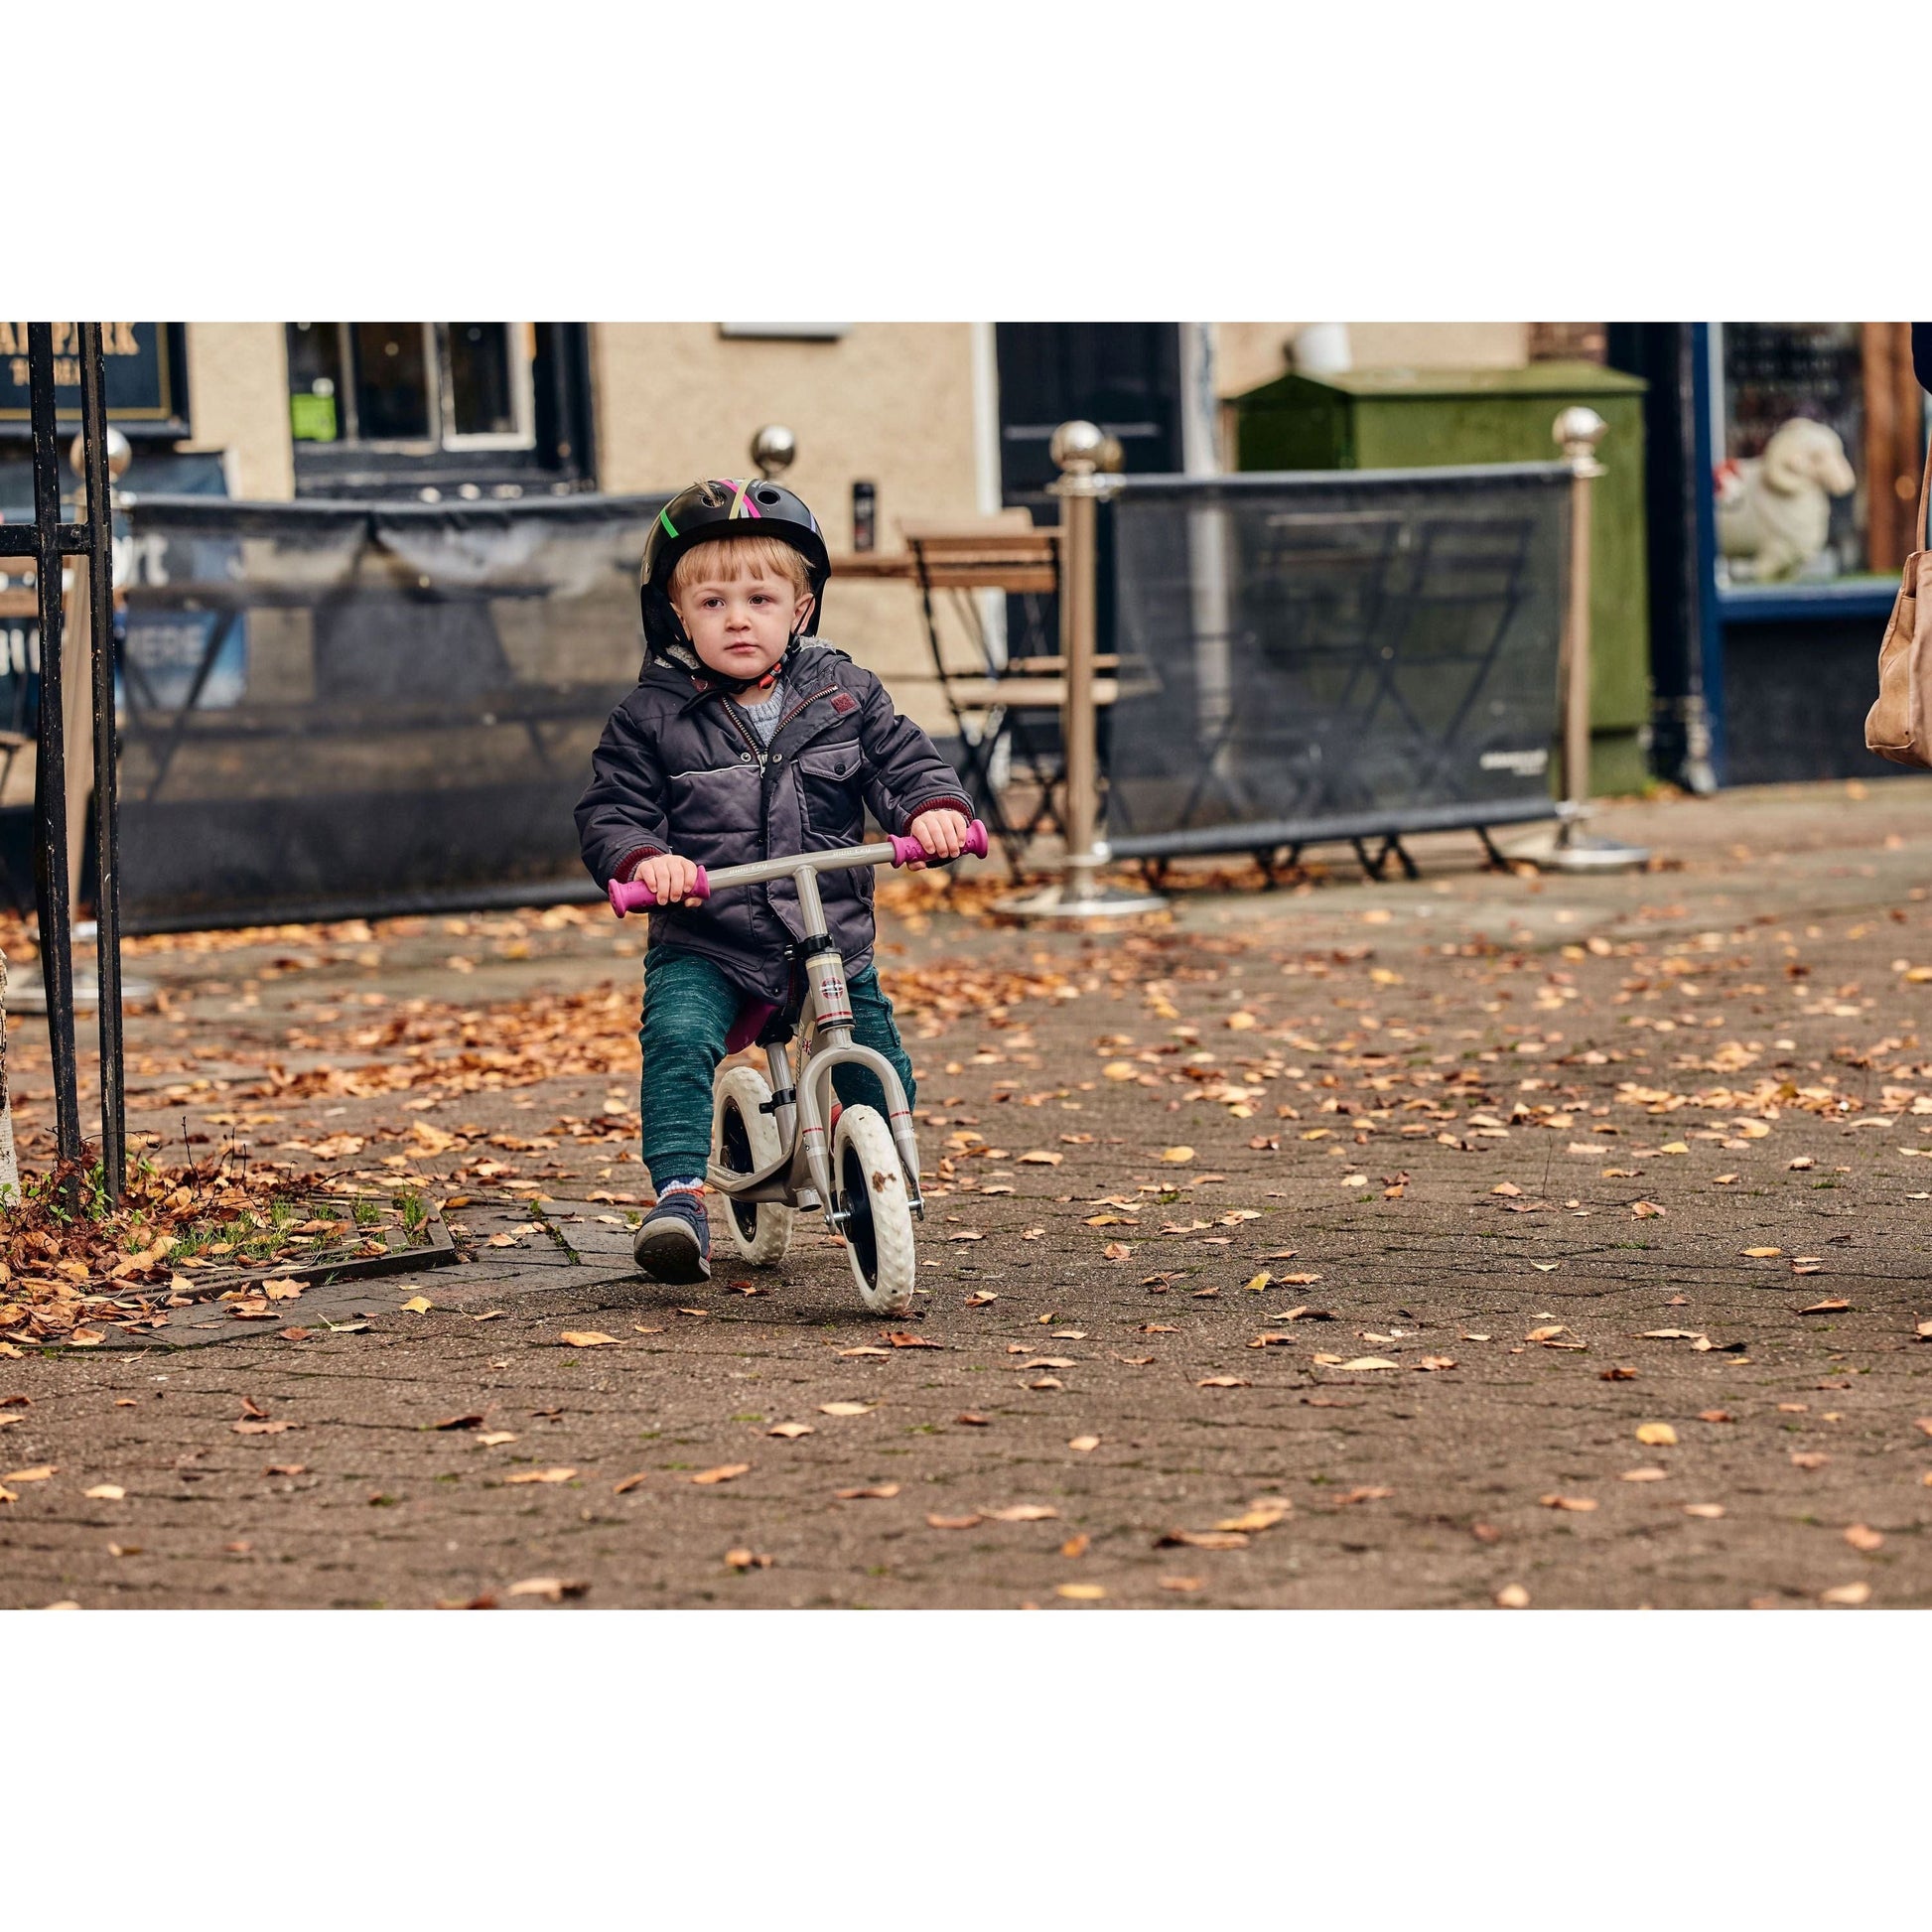 boy riding Ride-Ezy Go Balance Bike - Pink & Silver